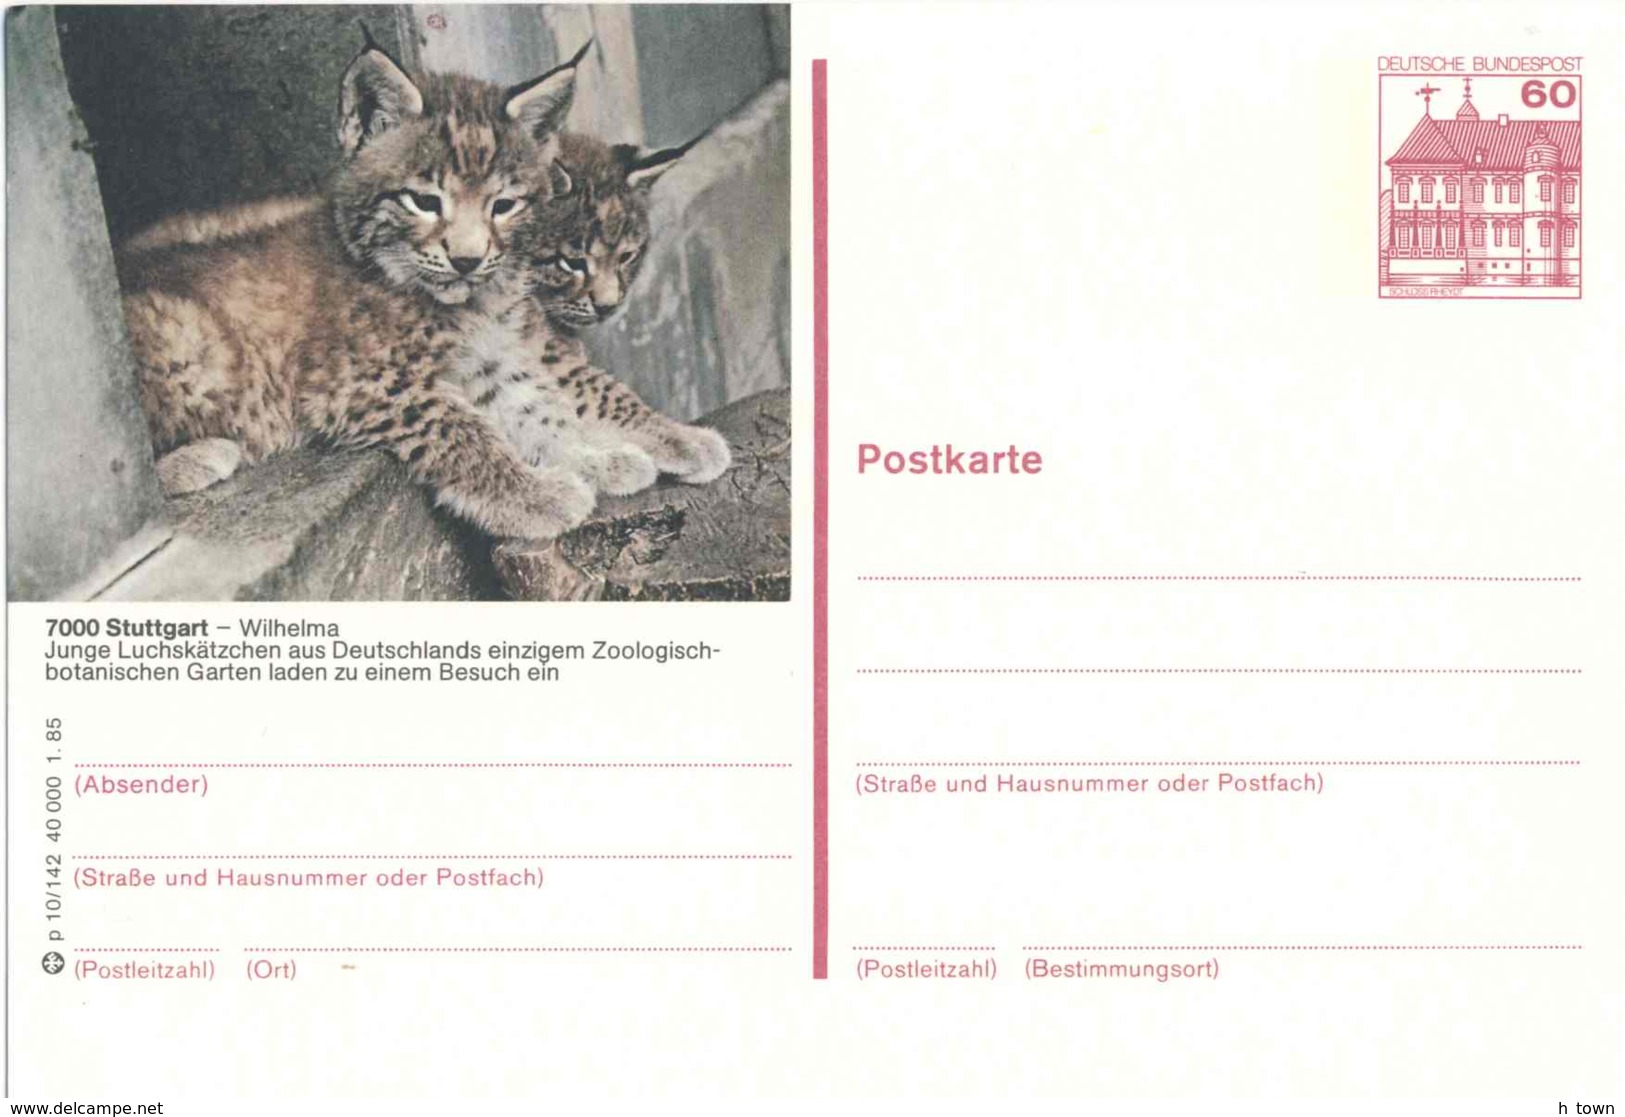 7219  Lynx: Entier (c.p.) D'Allemagne, 1985 - Lynx Stationery Postcard From Germany, Wilhelma Zoo Stuttgart - Felinos